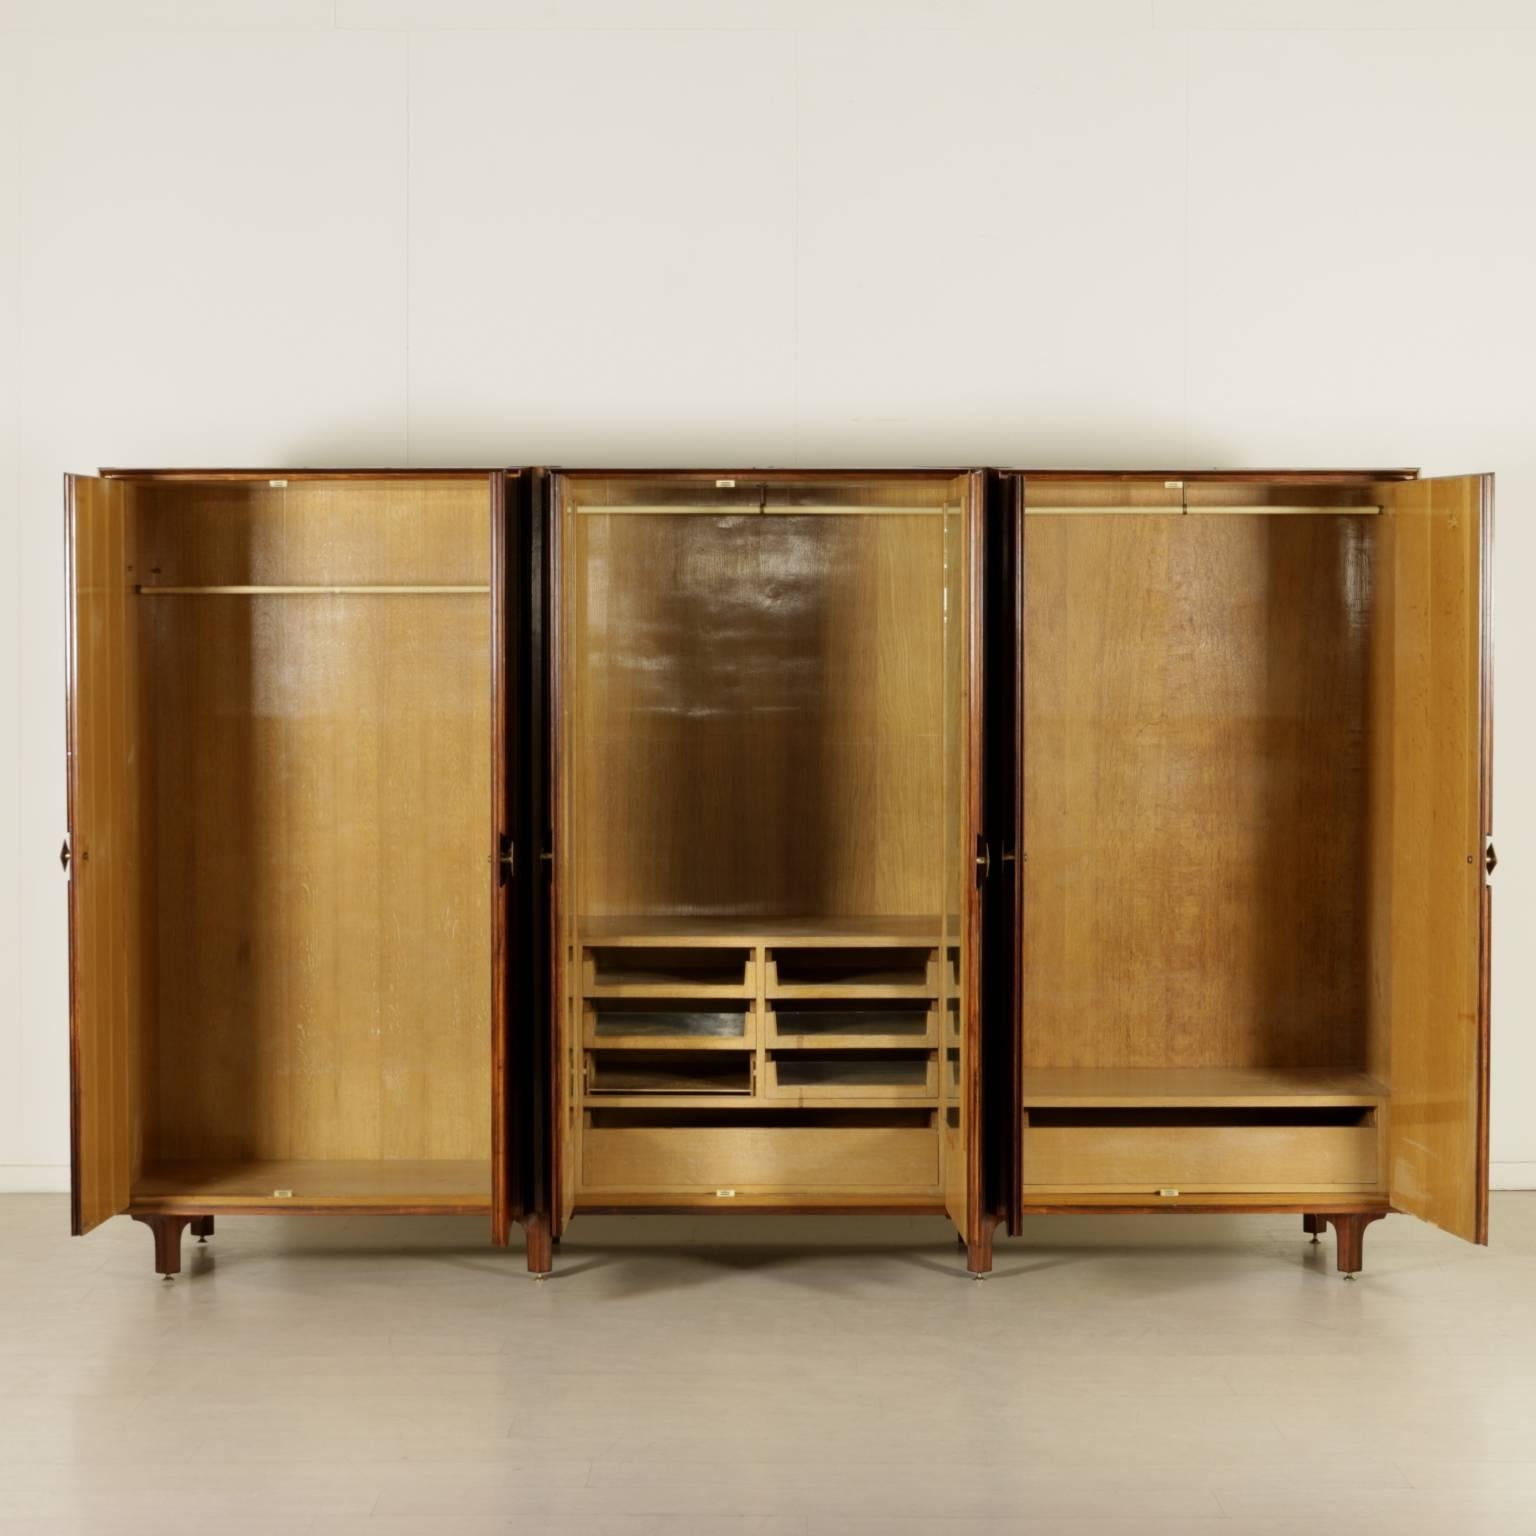 A wardrobe, rosewood veneer, oak veneered interior, brass handles. Manufactured in Italy by Artigiani del Mobile, 1960s.